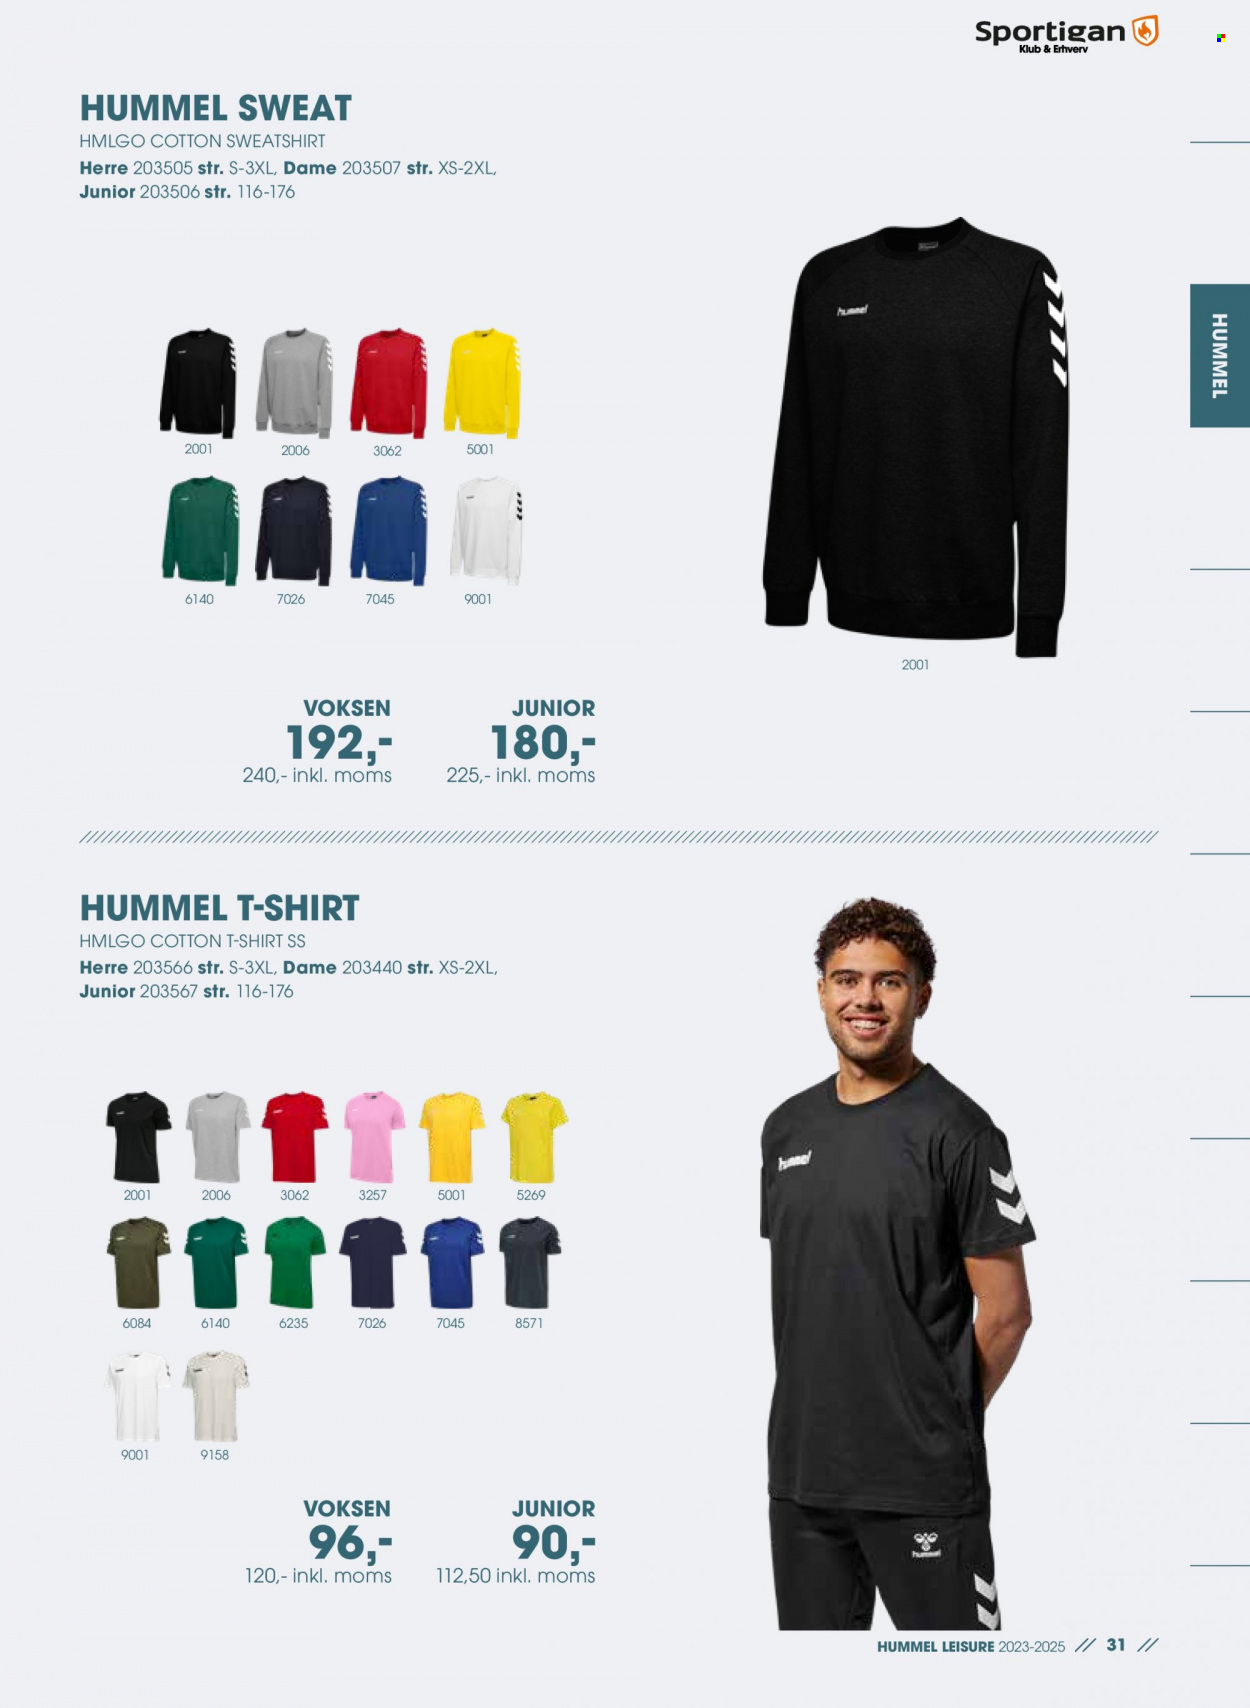 thumbnail - Sportigan tilbud  - tilbudsprodukter - Hummel, T-shirt, sweatshirt. Side 31.